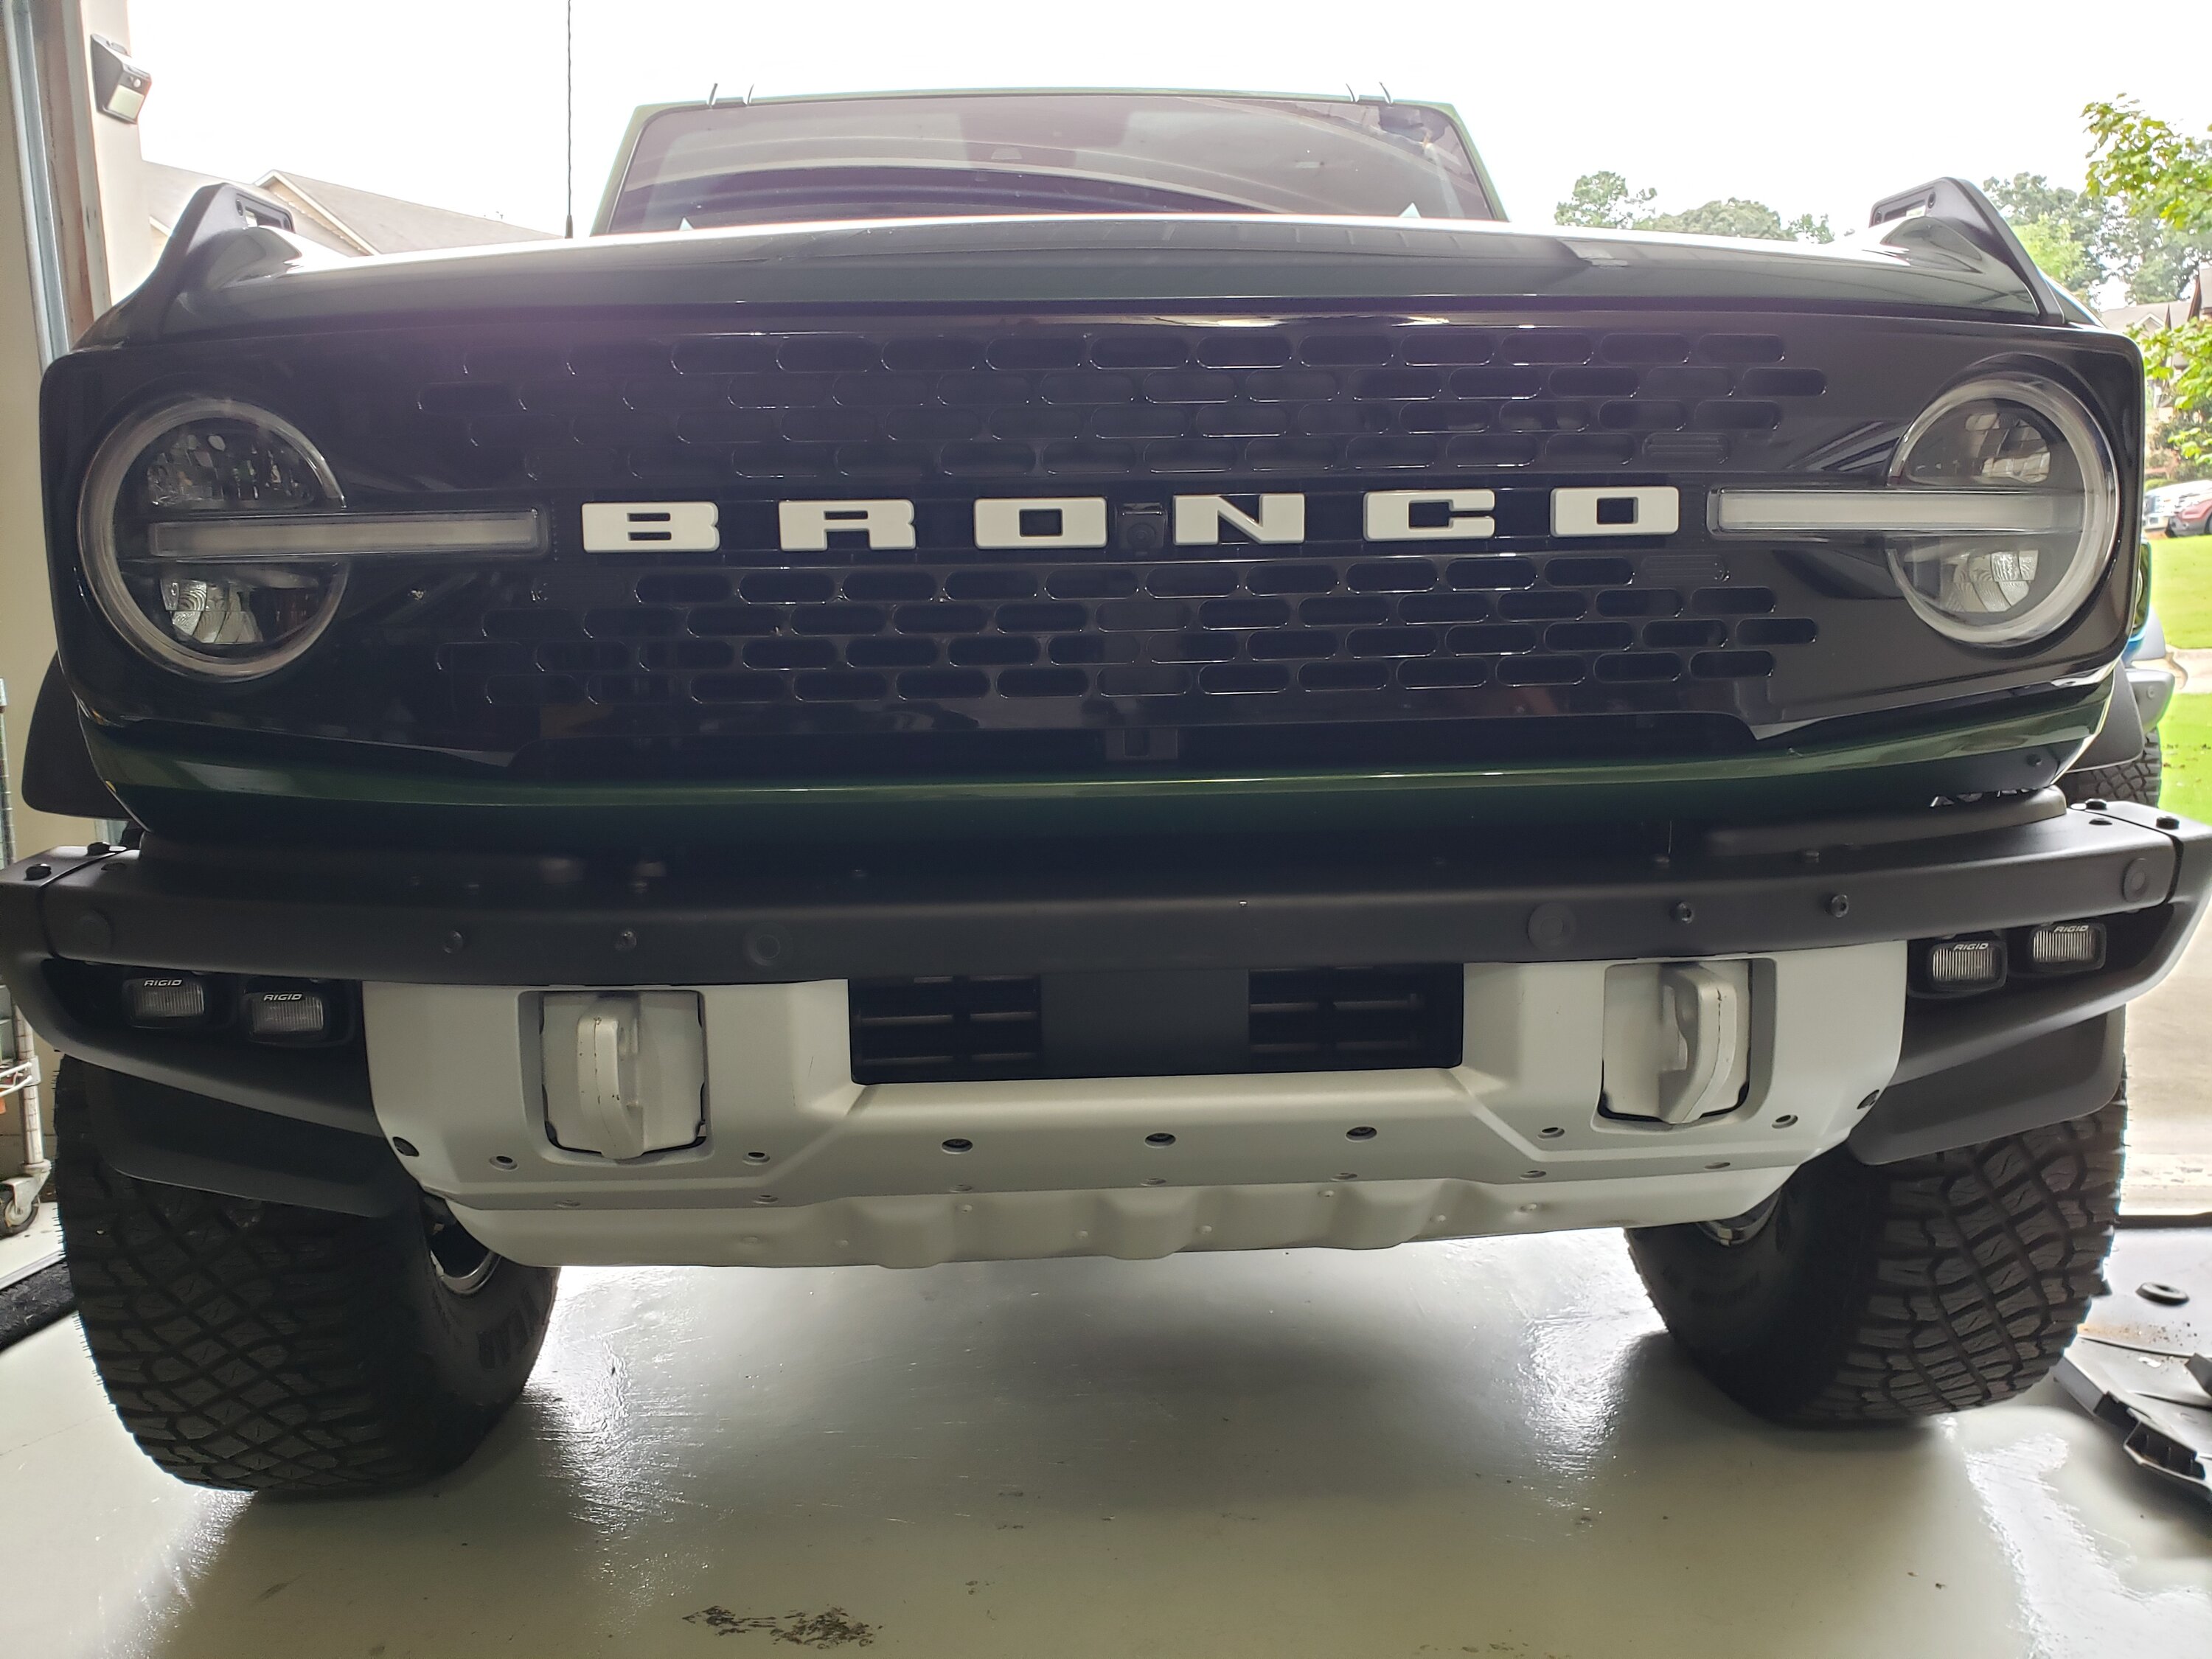 Bronco Wildtrak bumper Close Up.jpg